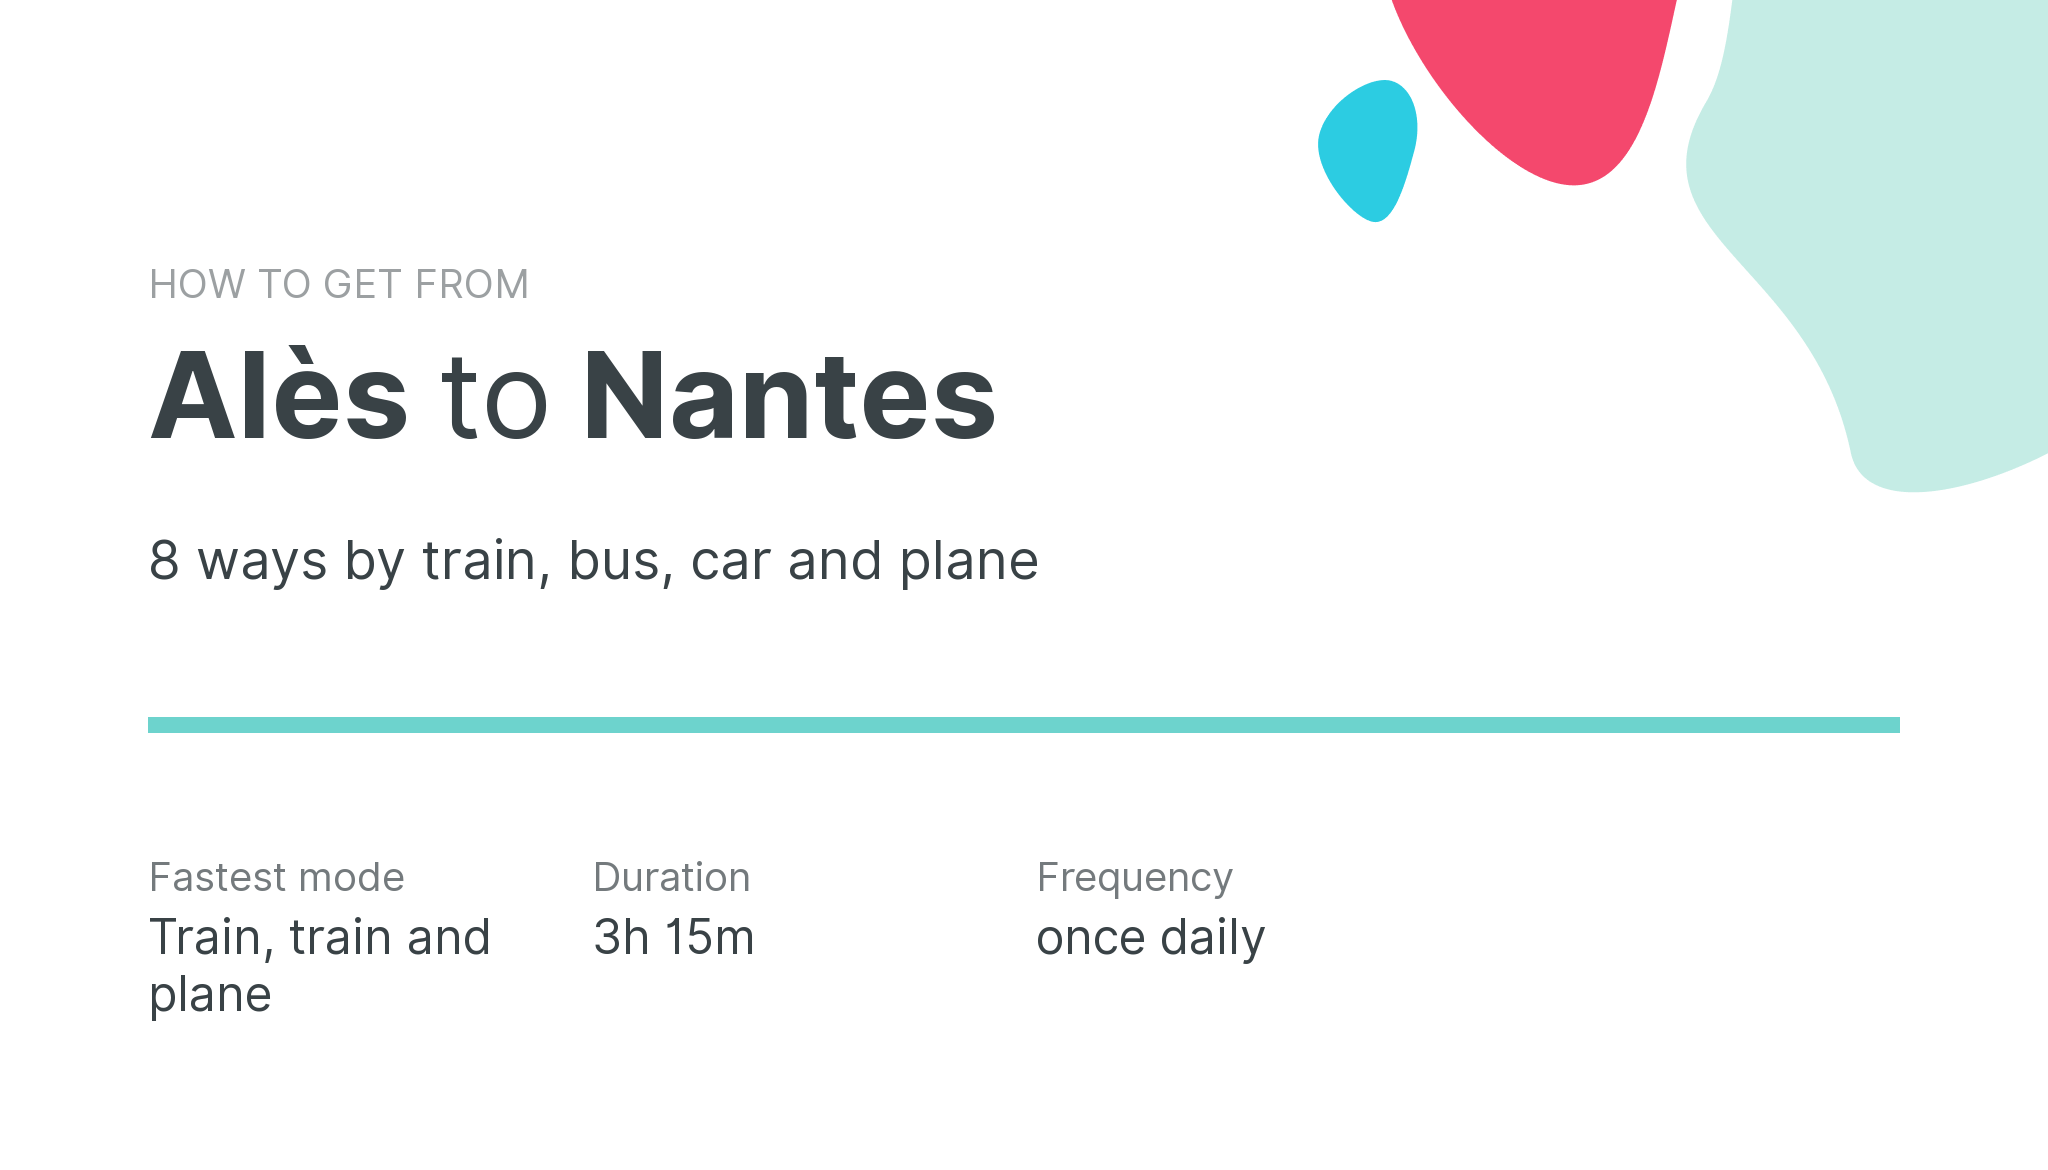 How do I get from Alès to Nantes